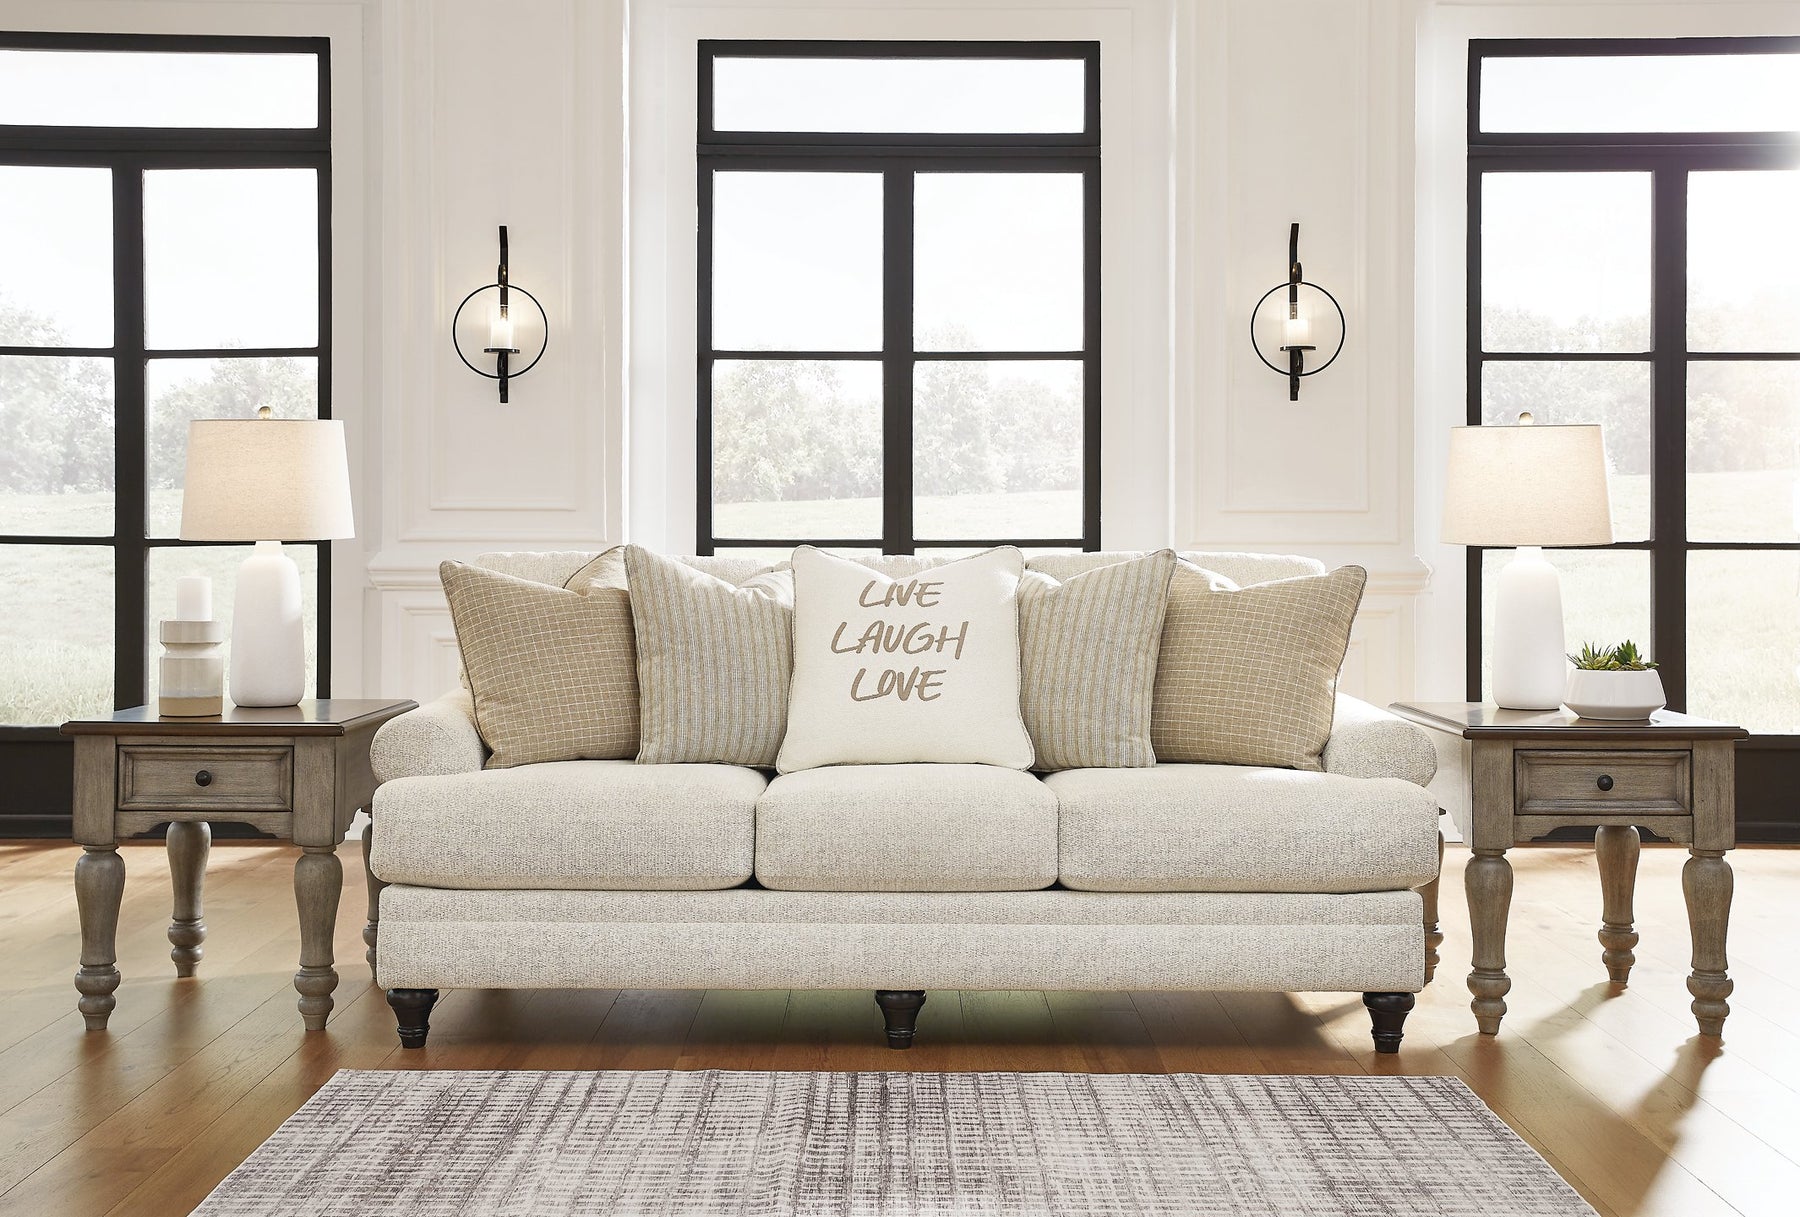 Valerani Living Room Set - Half Price Furniture